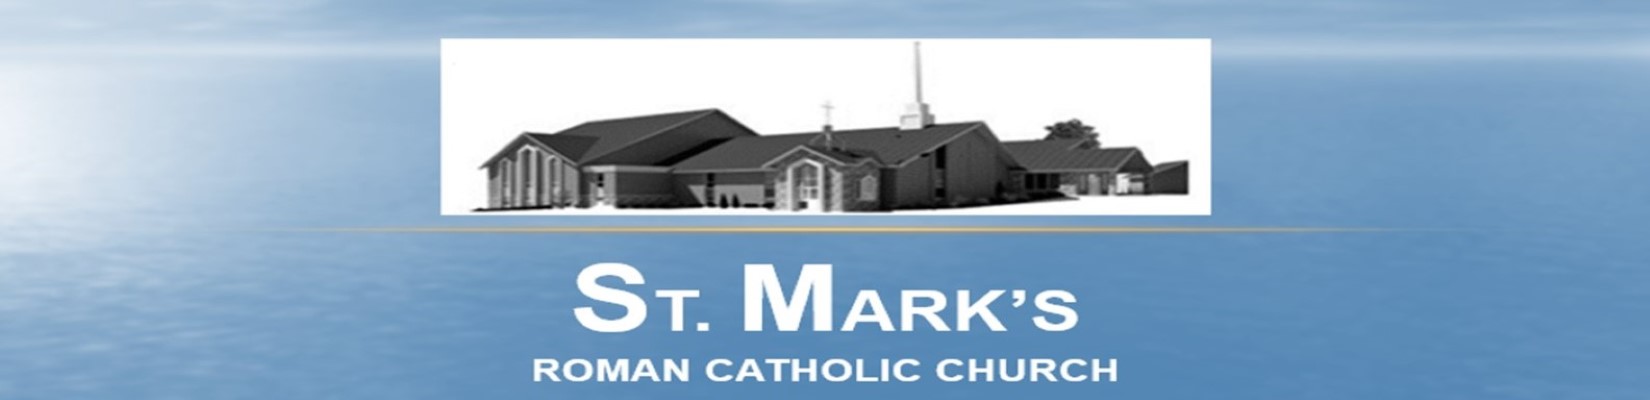 St. Mark's Church Banner